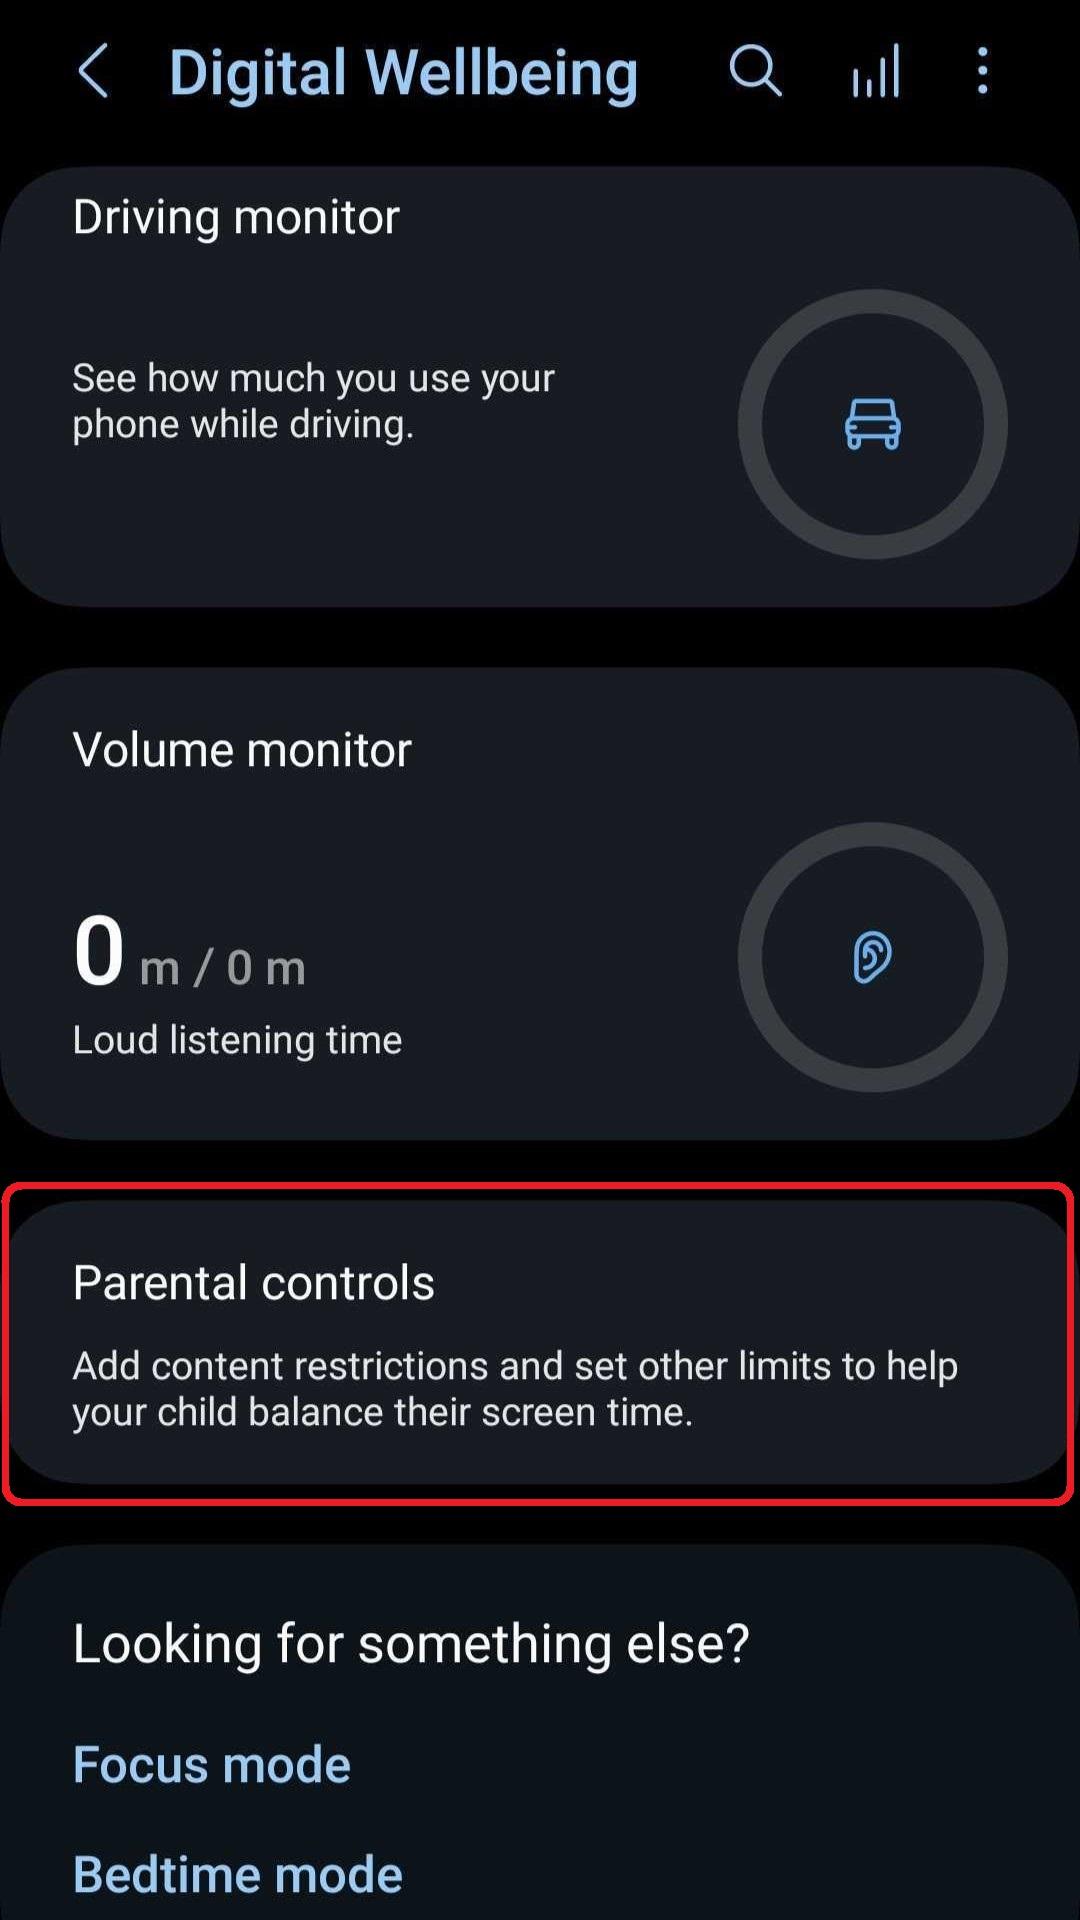 parental controls menu option